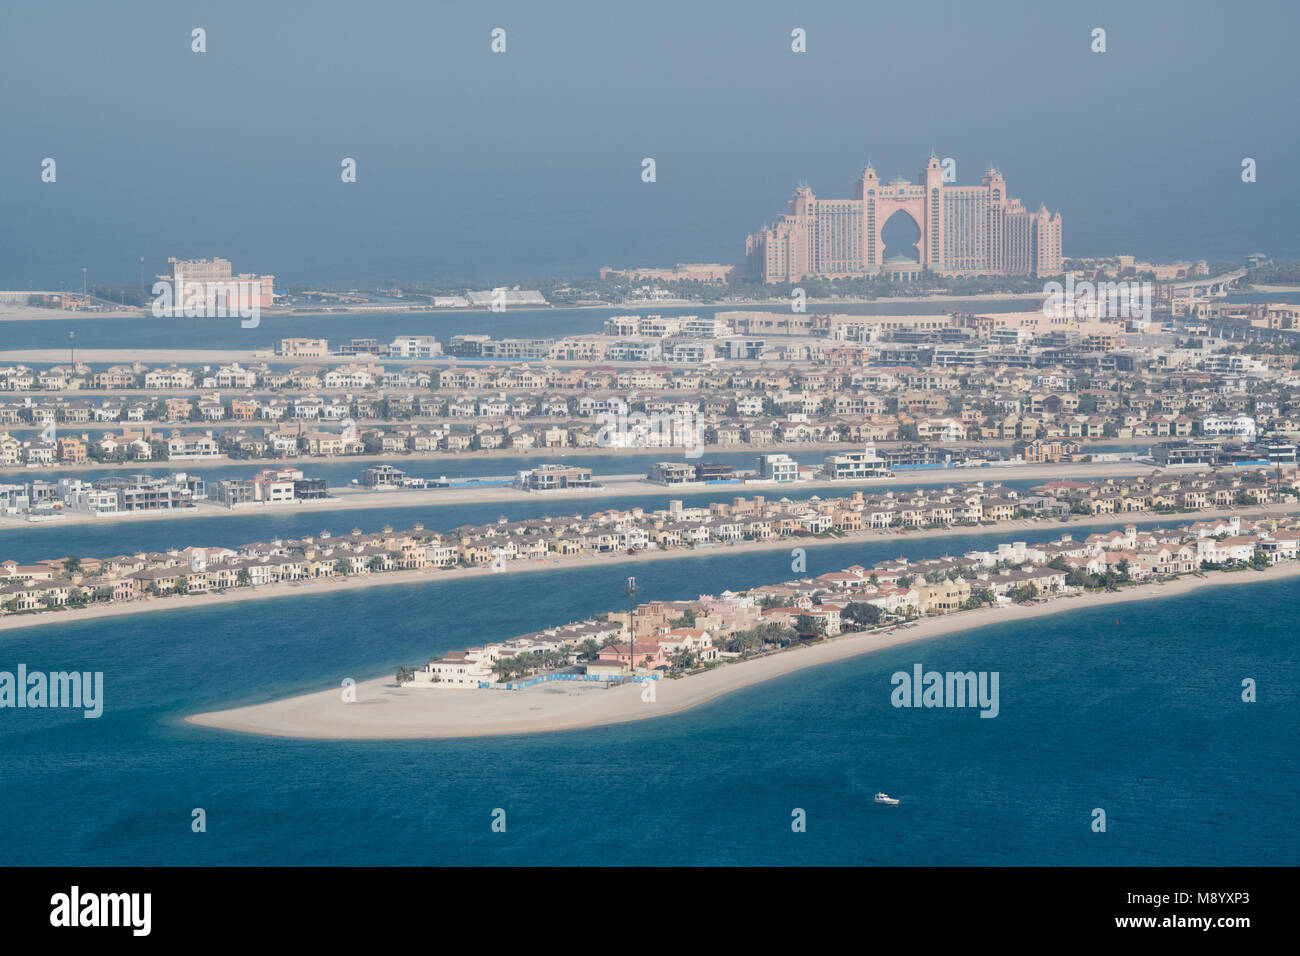 DUBAI, UAE - February 14, 2018: Aerial view of Hotel Atlantis The Palm, Palm Jumeirah, Dubai, United Arab Emirates Stock Photo